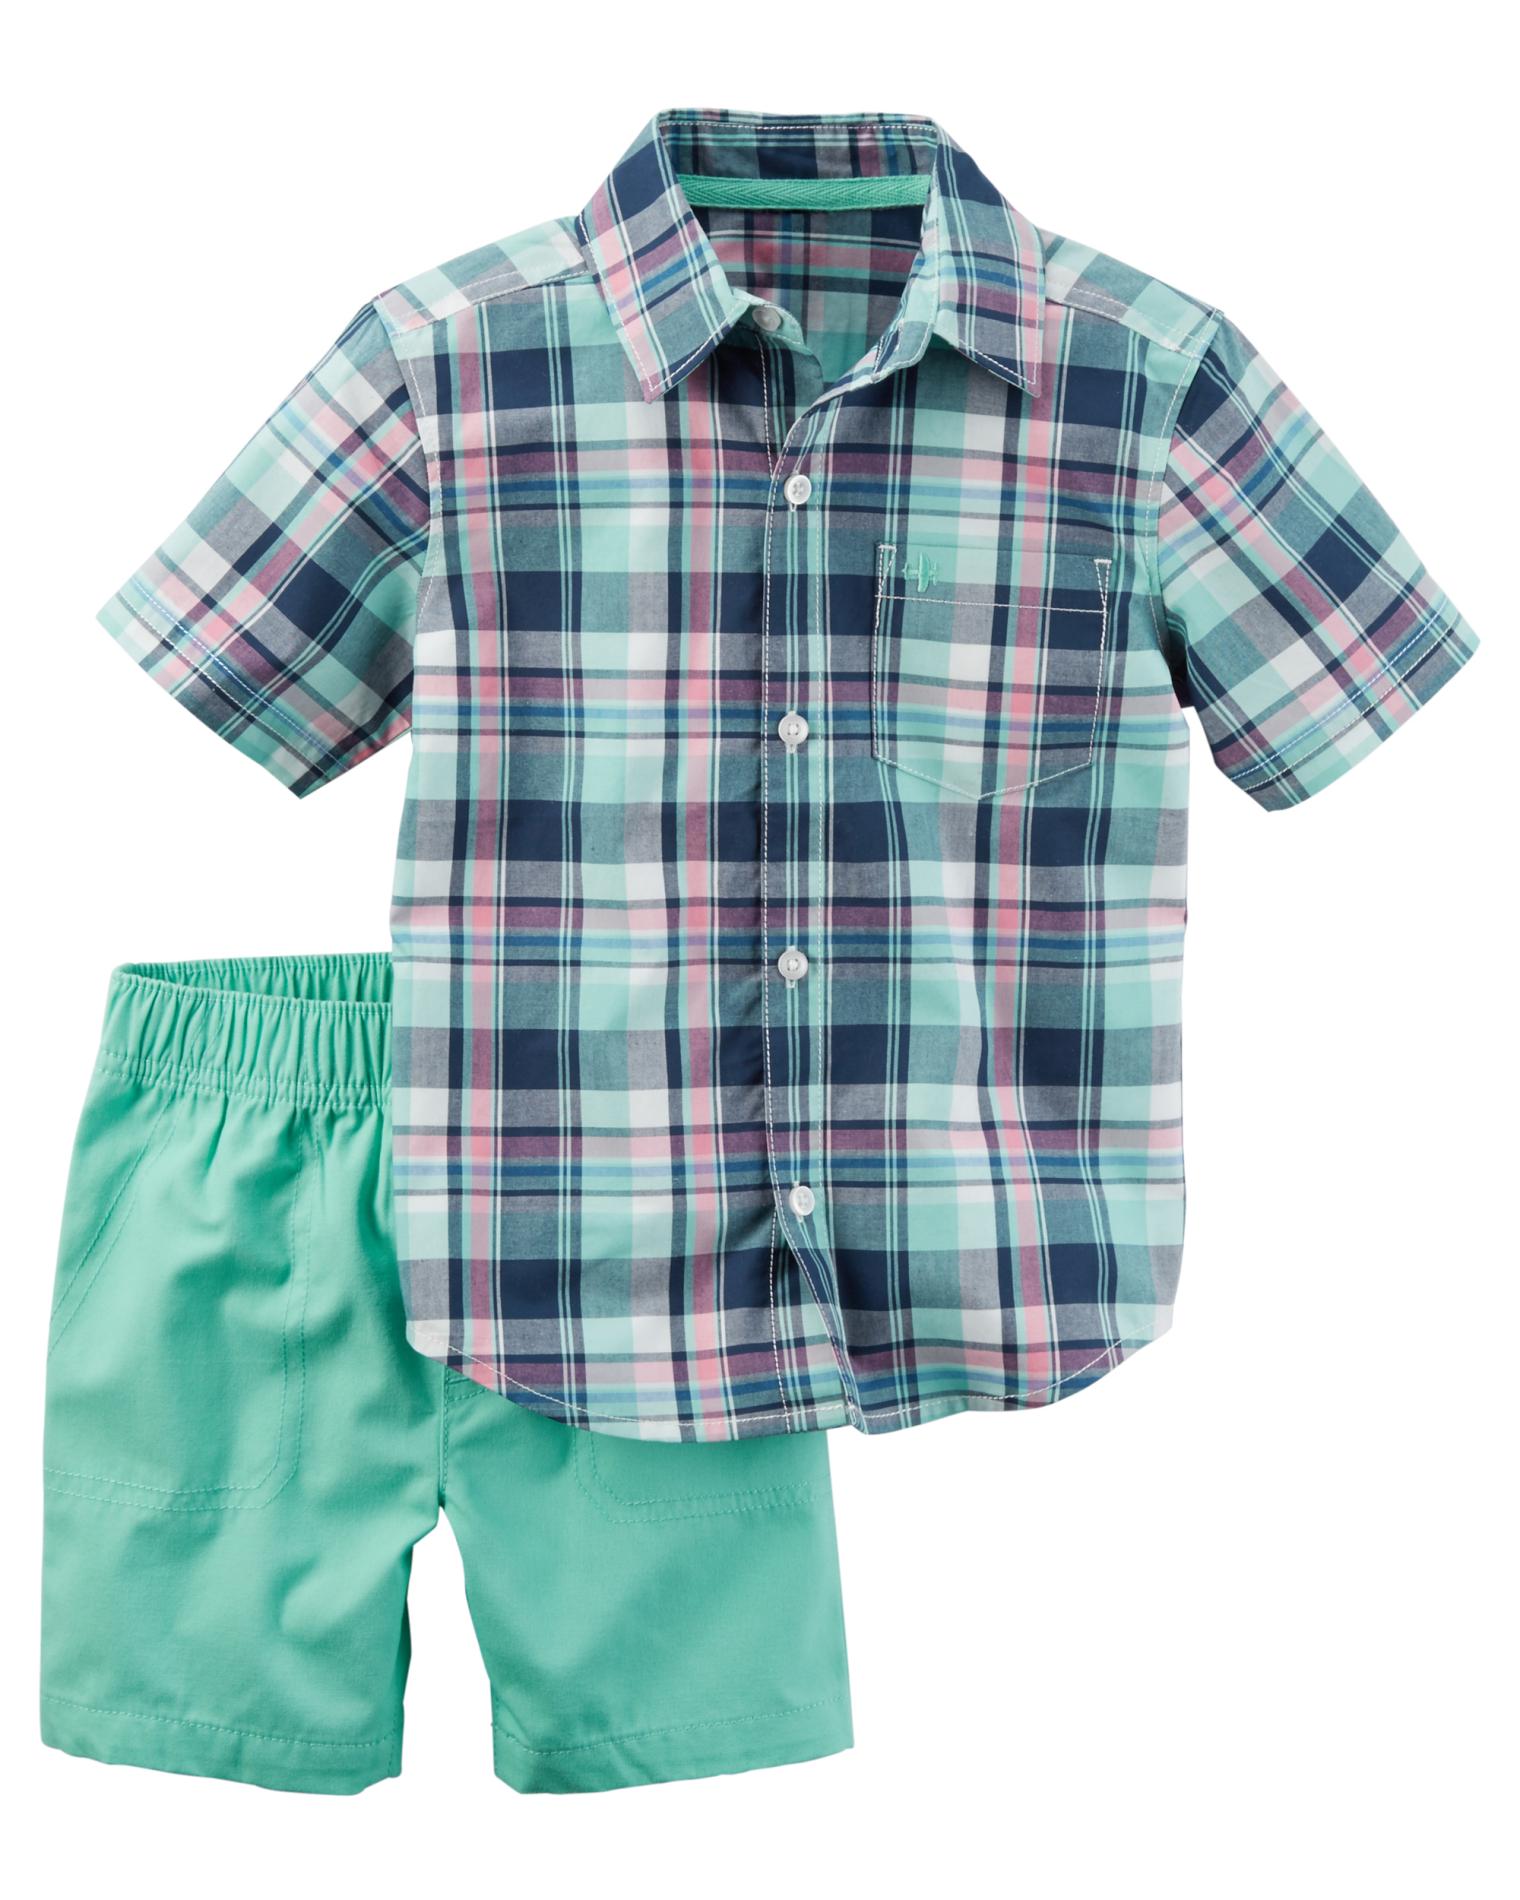 Carter's Toddler Boys' Button-Front Shirt & Shorts - Plaid